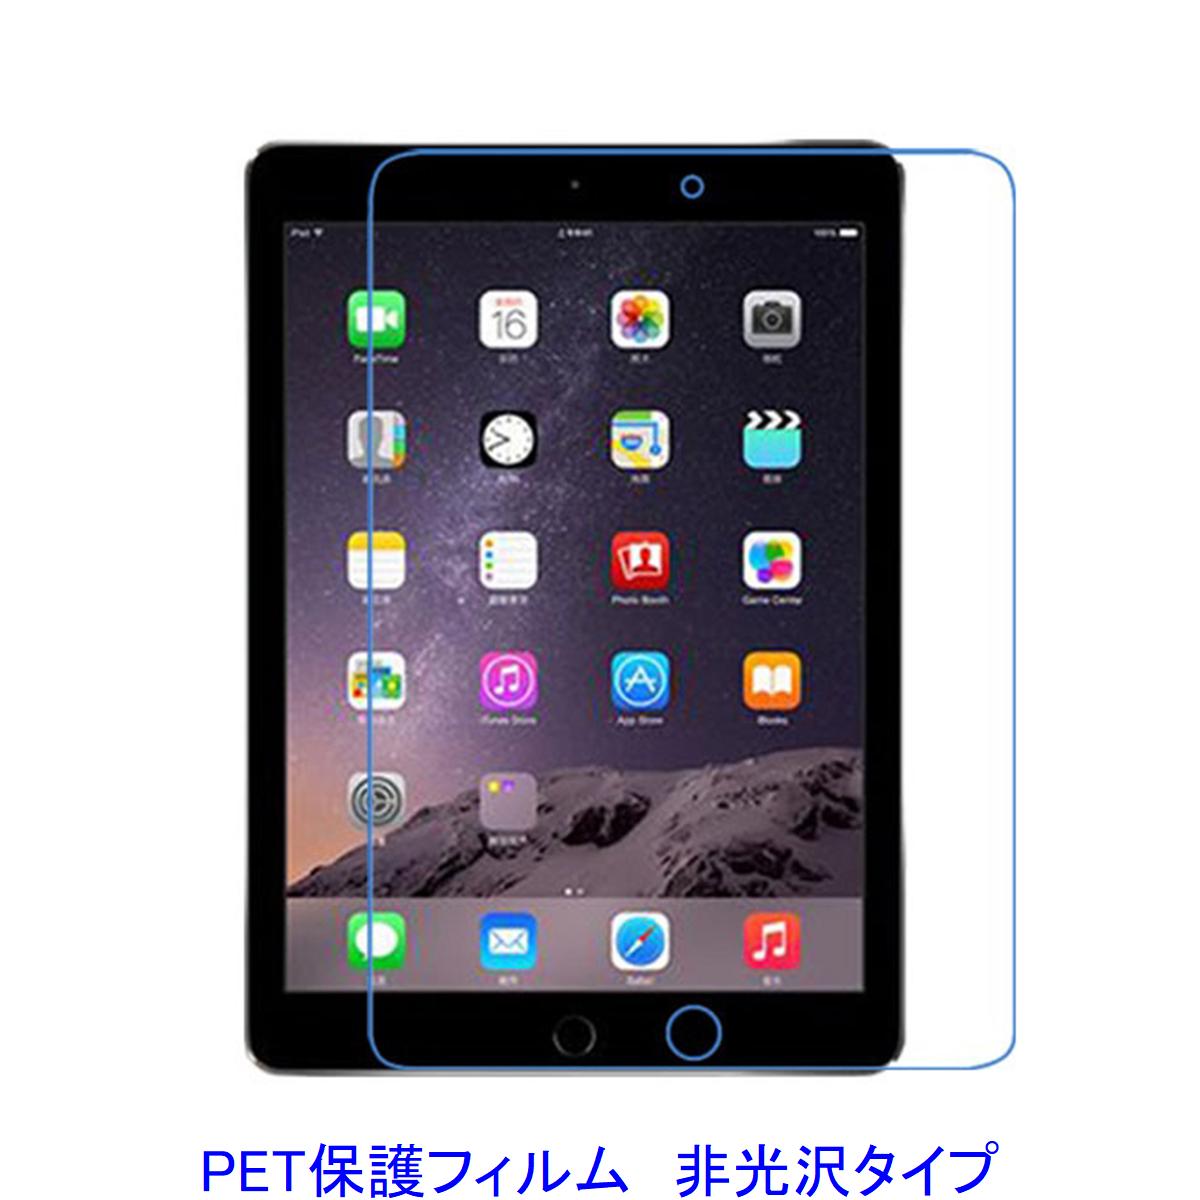 Newzerol For iPad mini ガラスフィルム